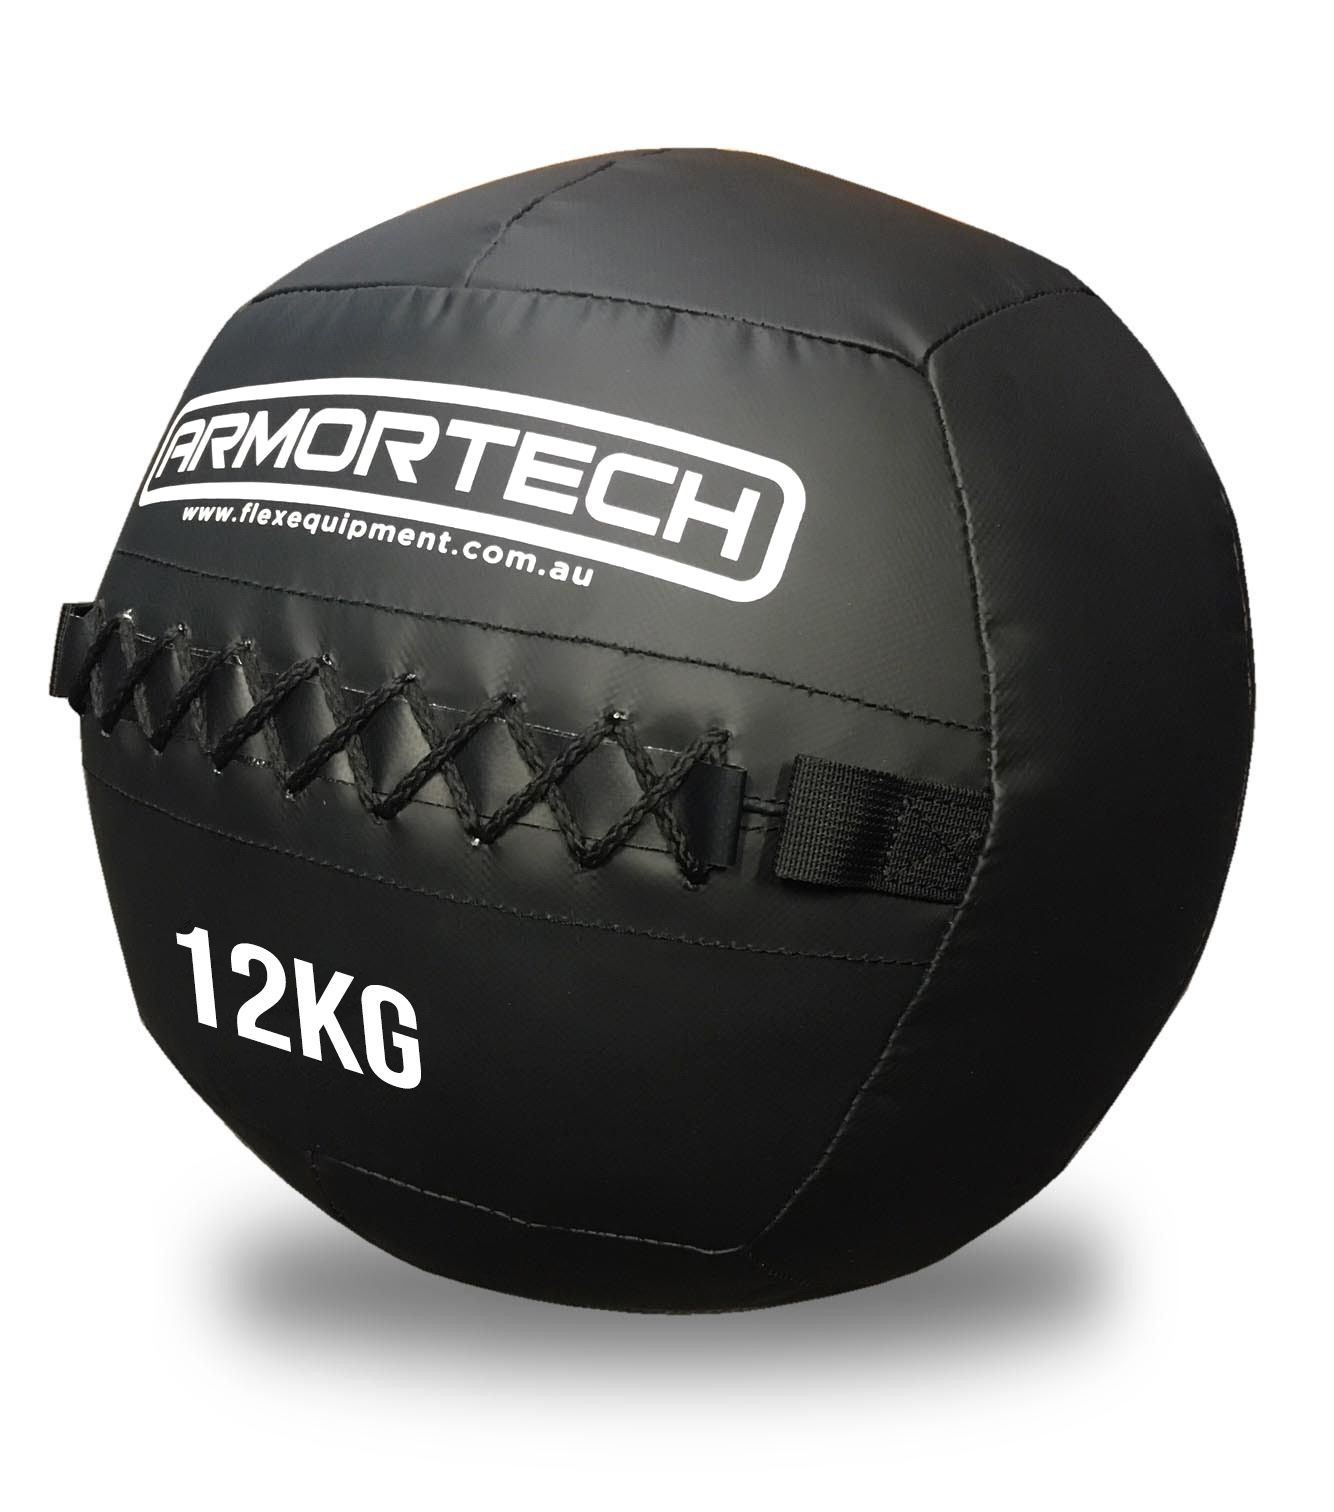 Armortech V2 Wall Balls KG 12kg